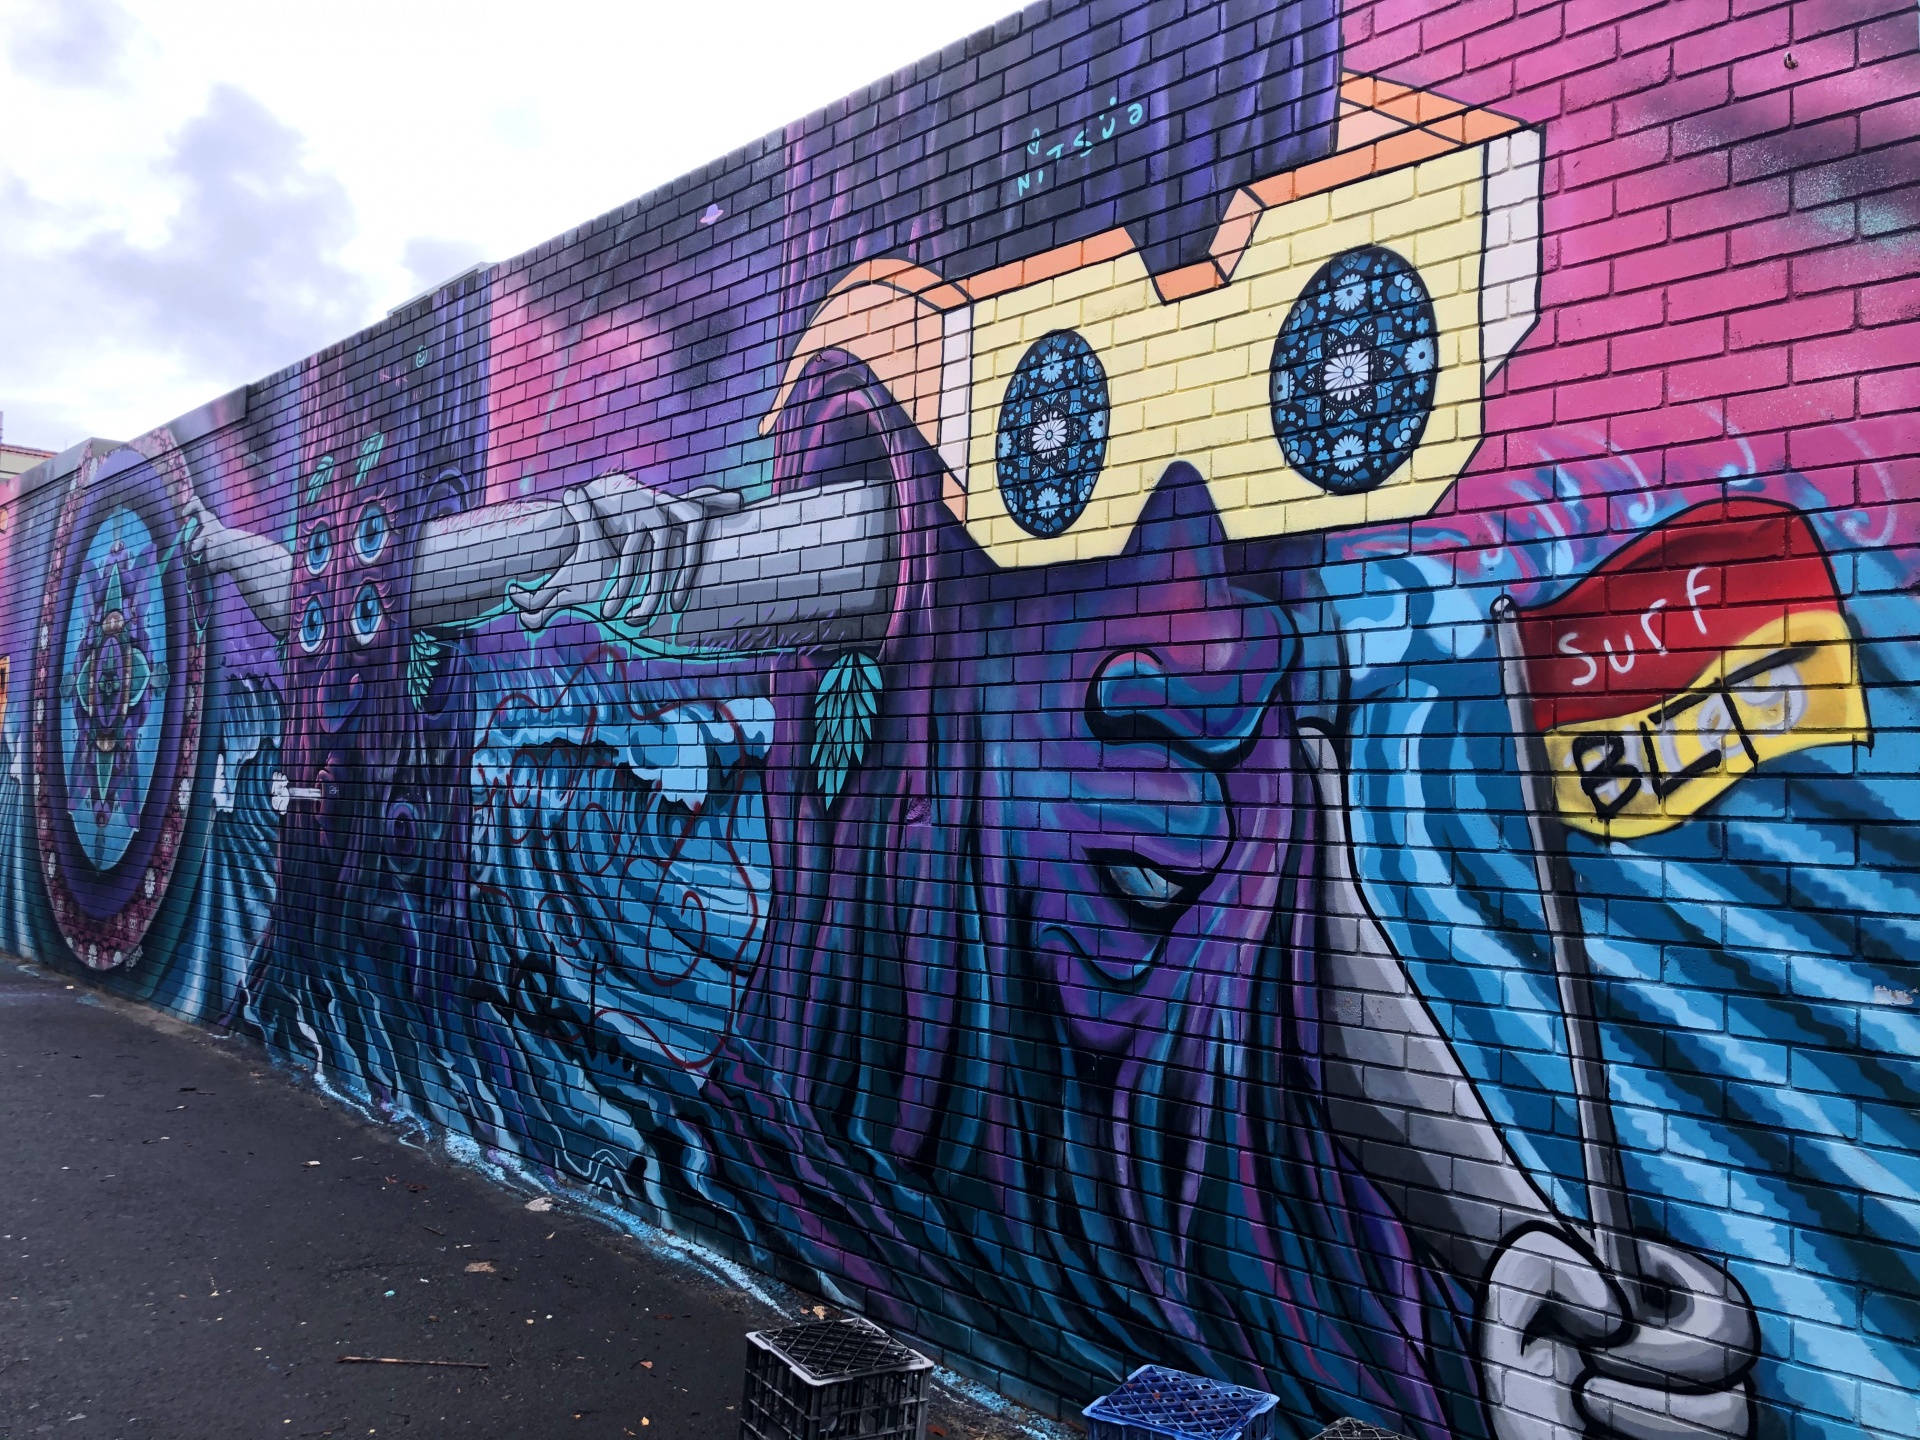 surfer, surfing, art, graffiti, painting, wall, color, brick, street art, urban art, urban, artistic, grunge, colorful, illustration, design, arts, mural, spray paint, psychedelic art, paint, brickwork, road, street, youth, city, spray, artwork, graffiti